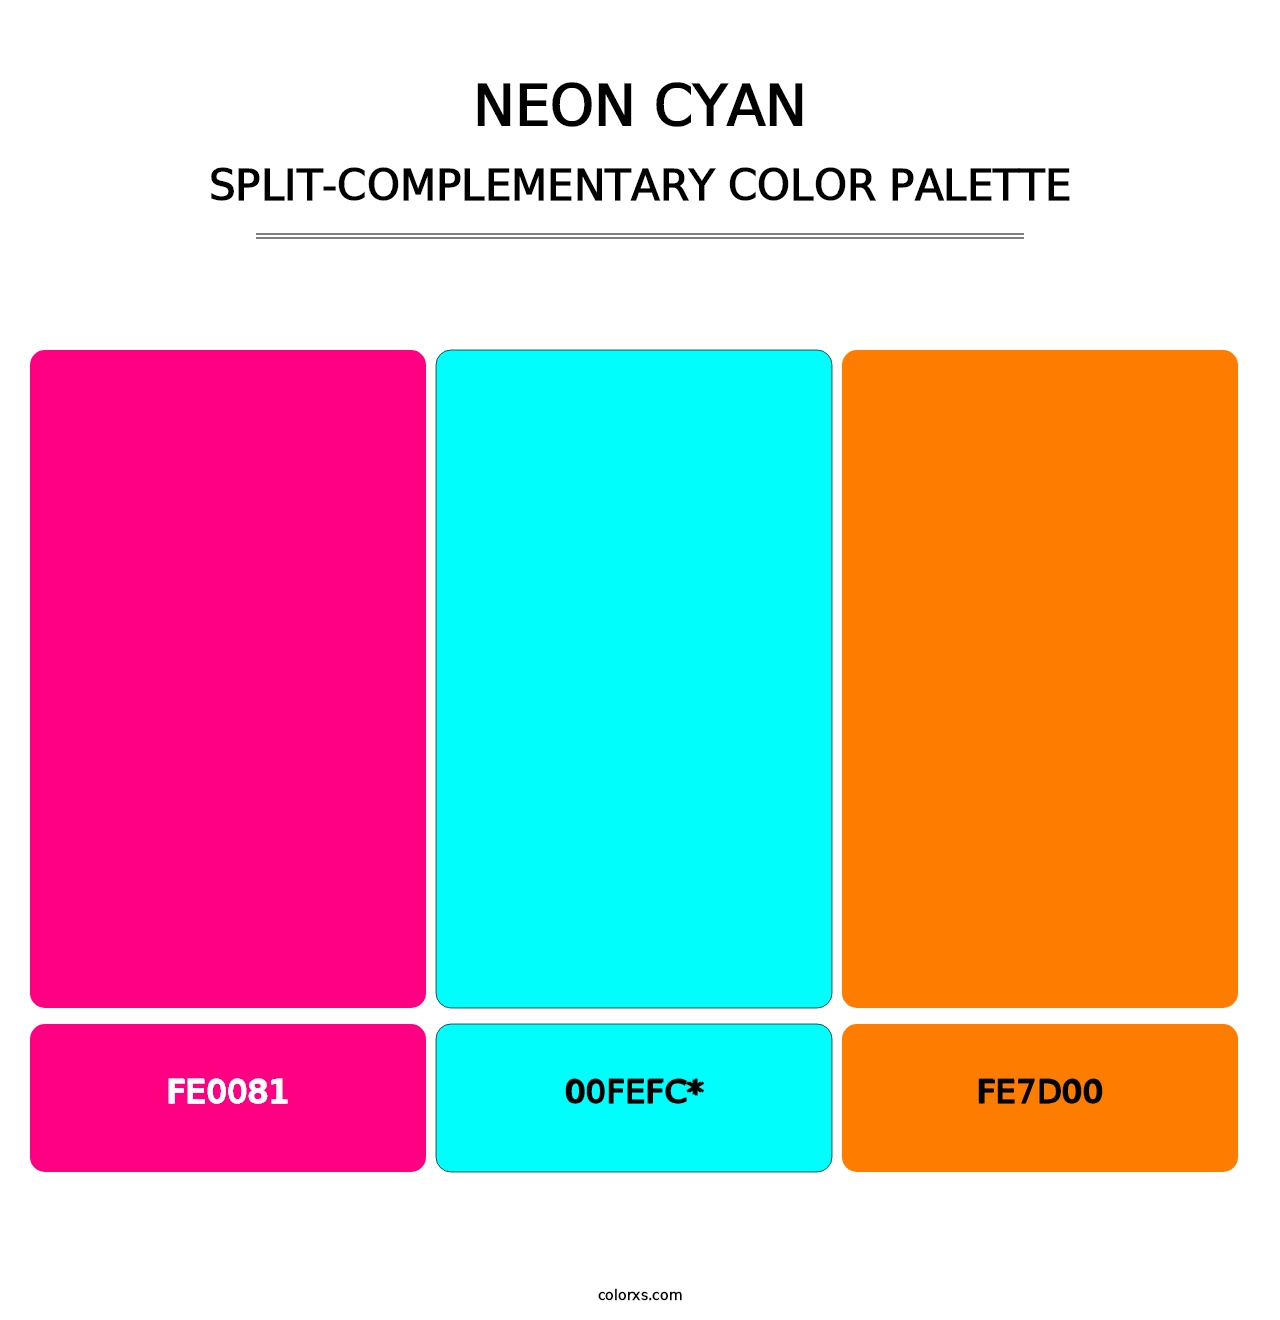 Neon Cyan - Split-Complementary Color Palette